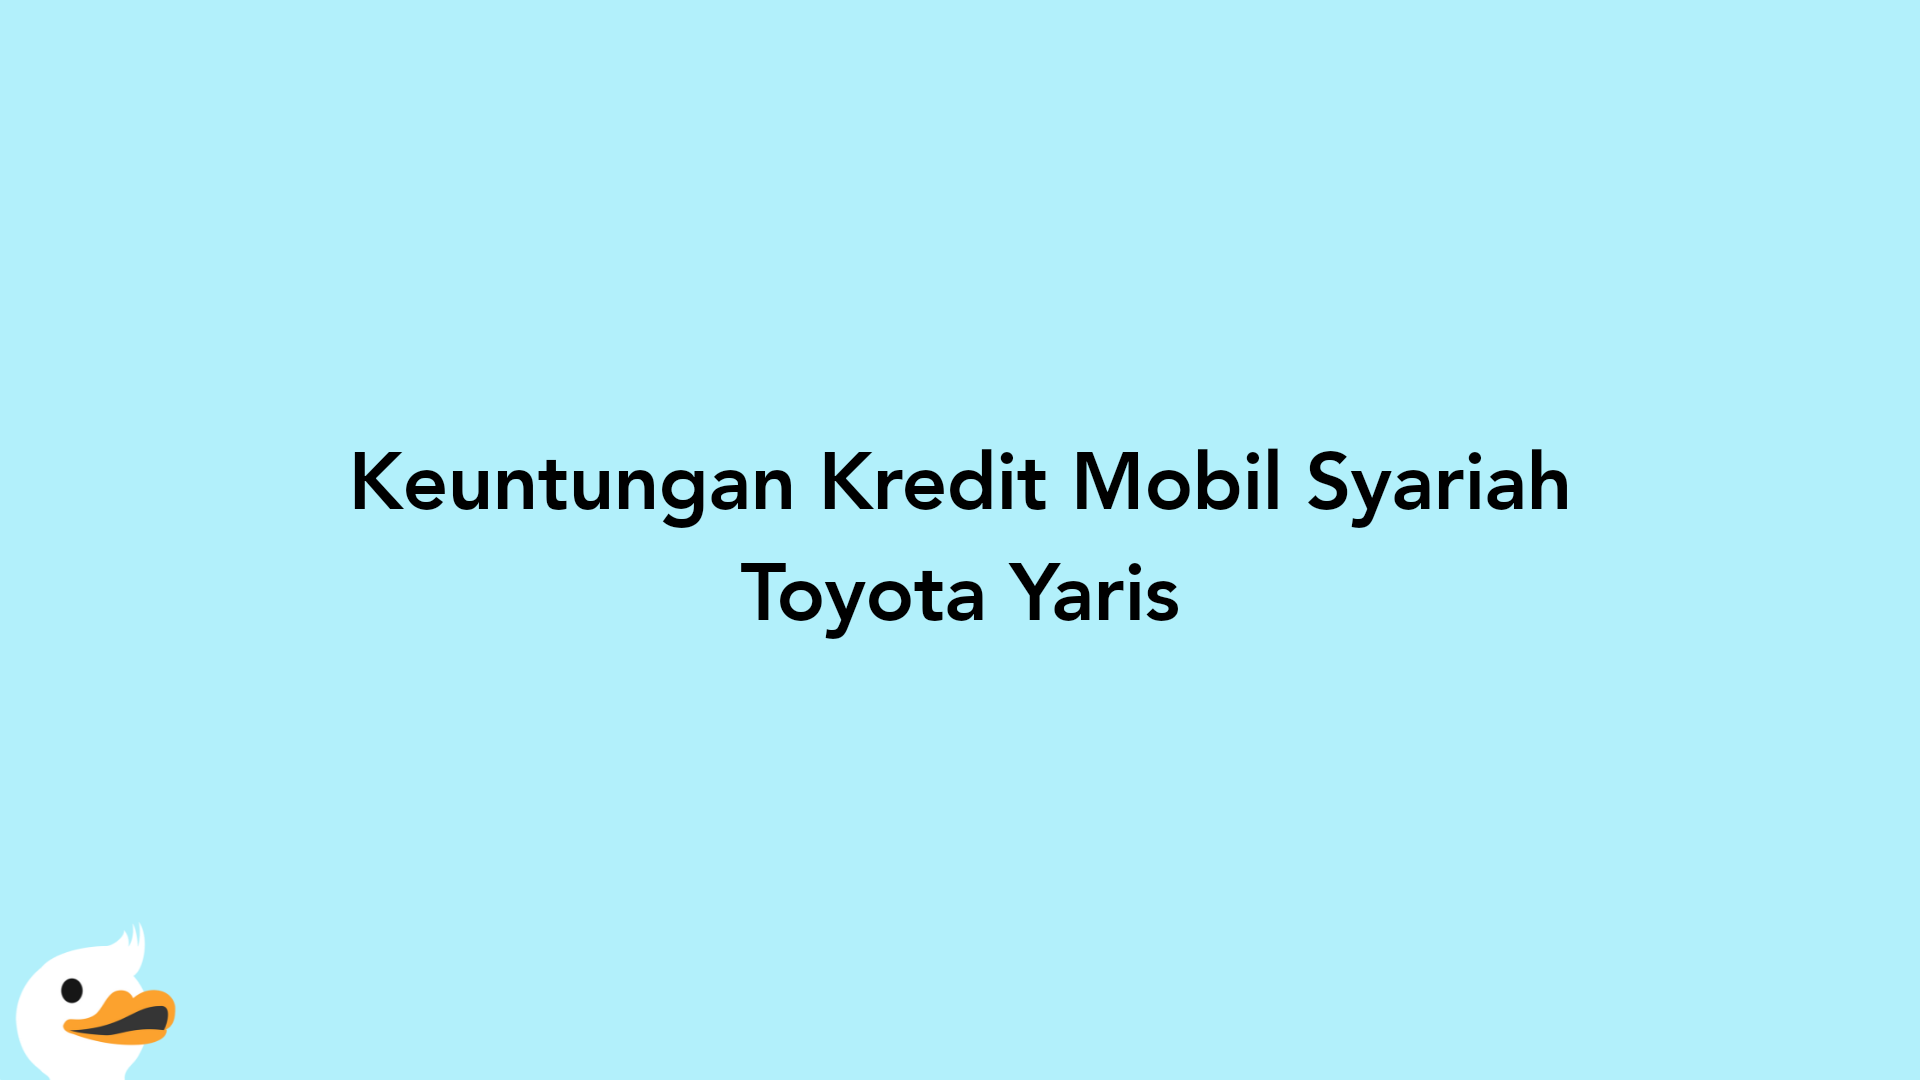 Keuntungan Kredit Mobil Syariah Toyota Yaris